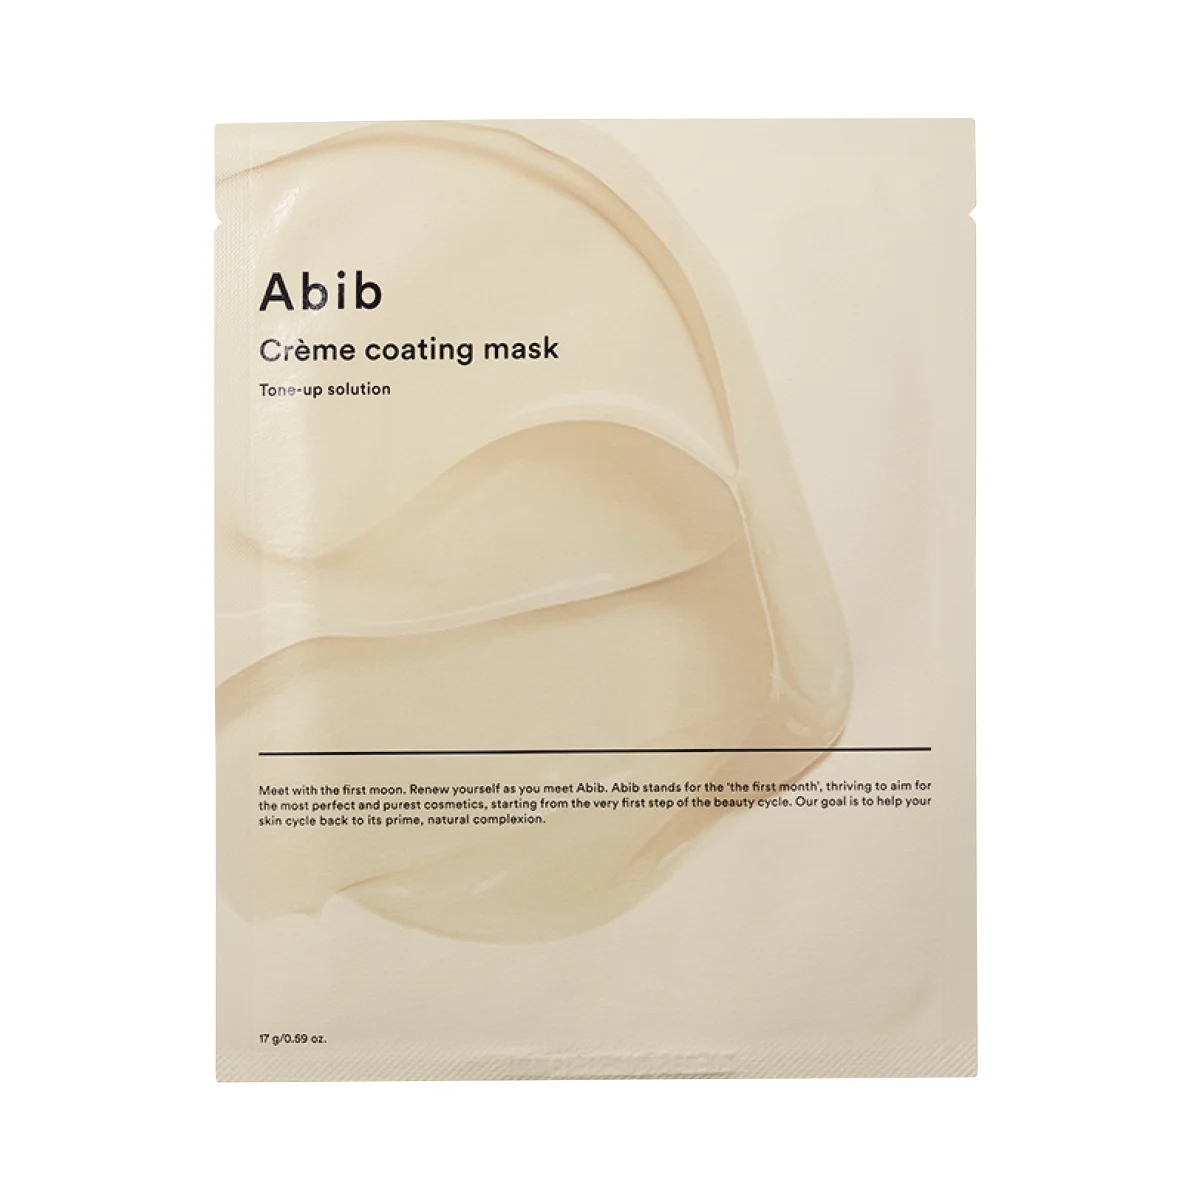 Abib Crème coating mask